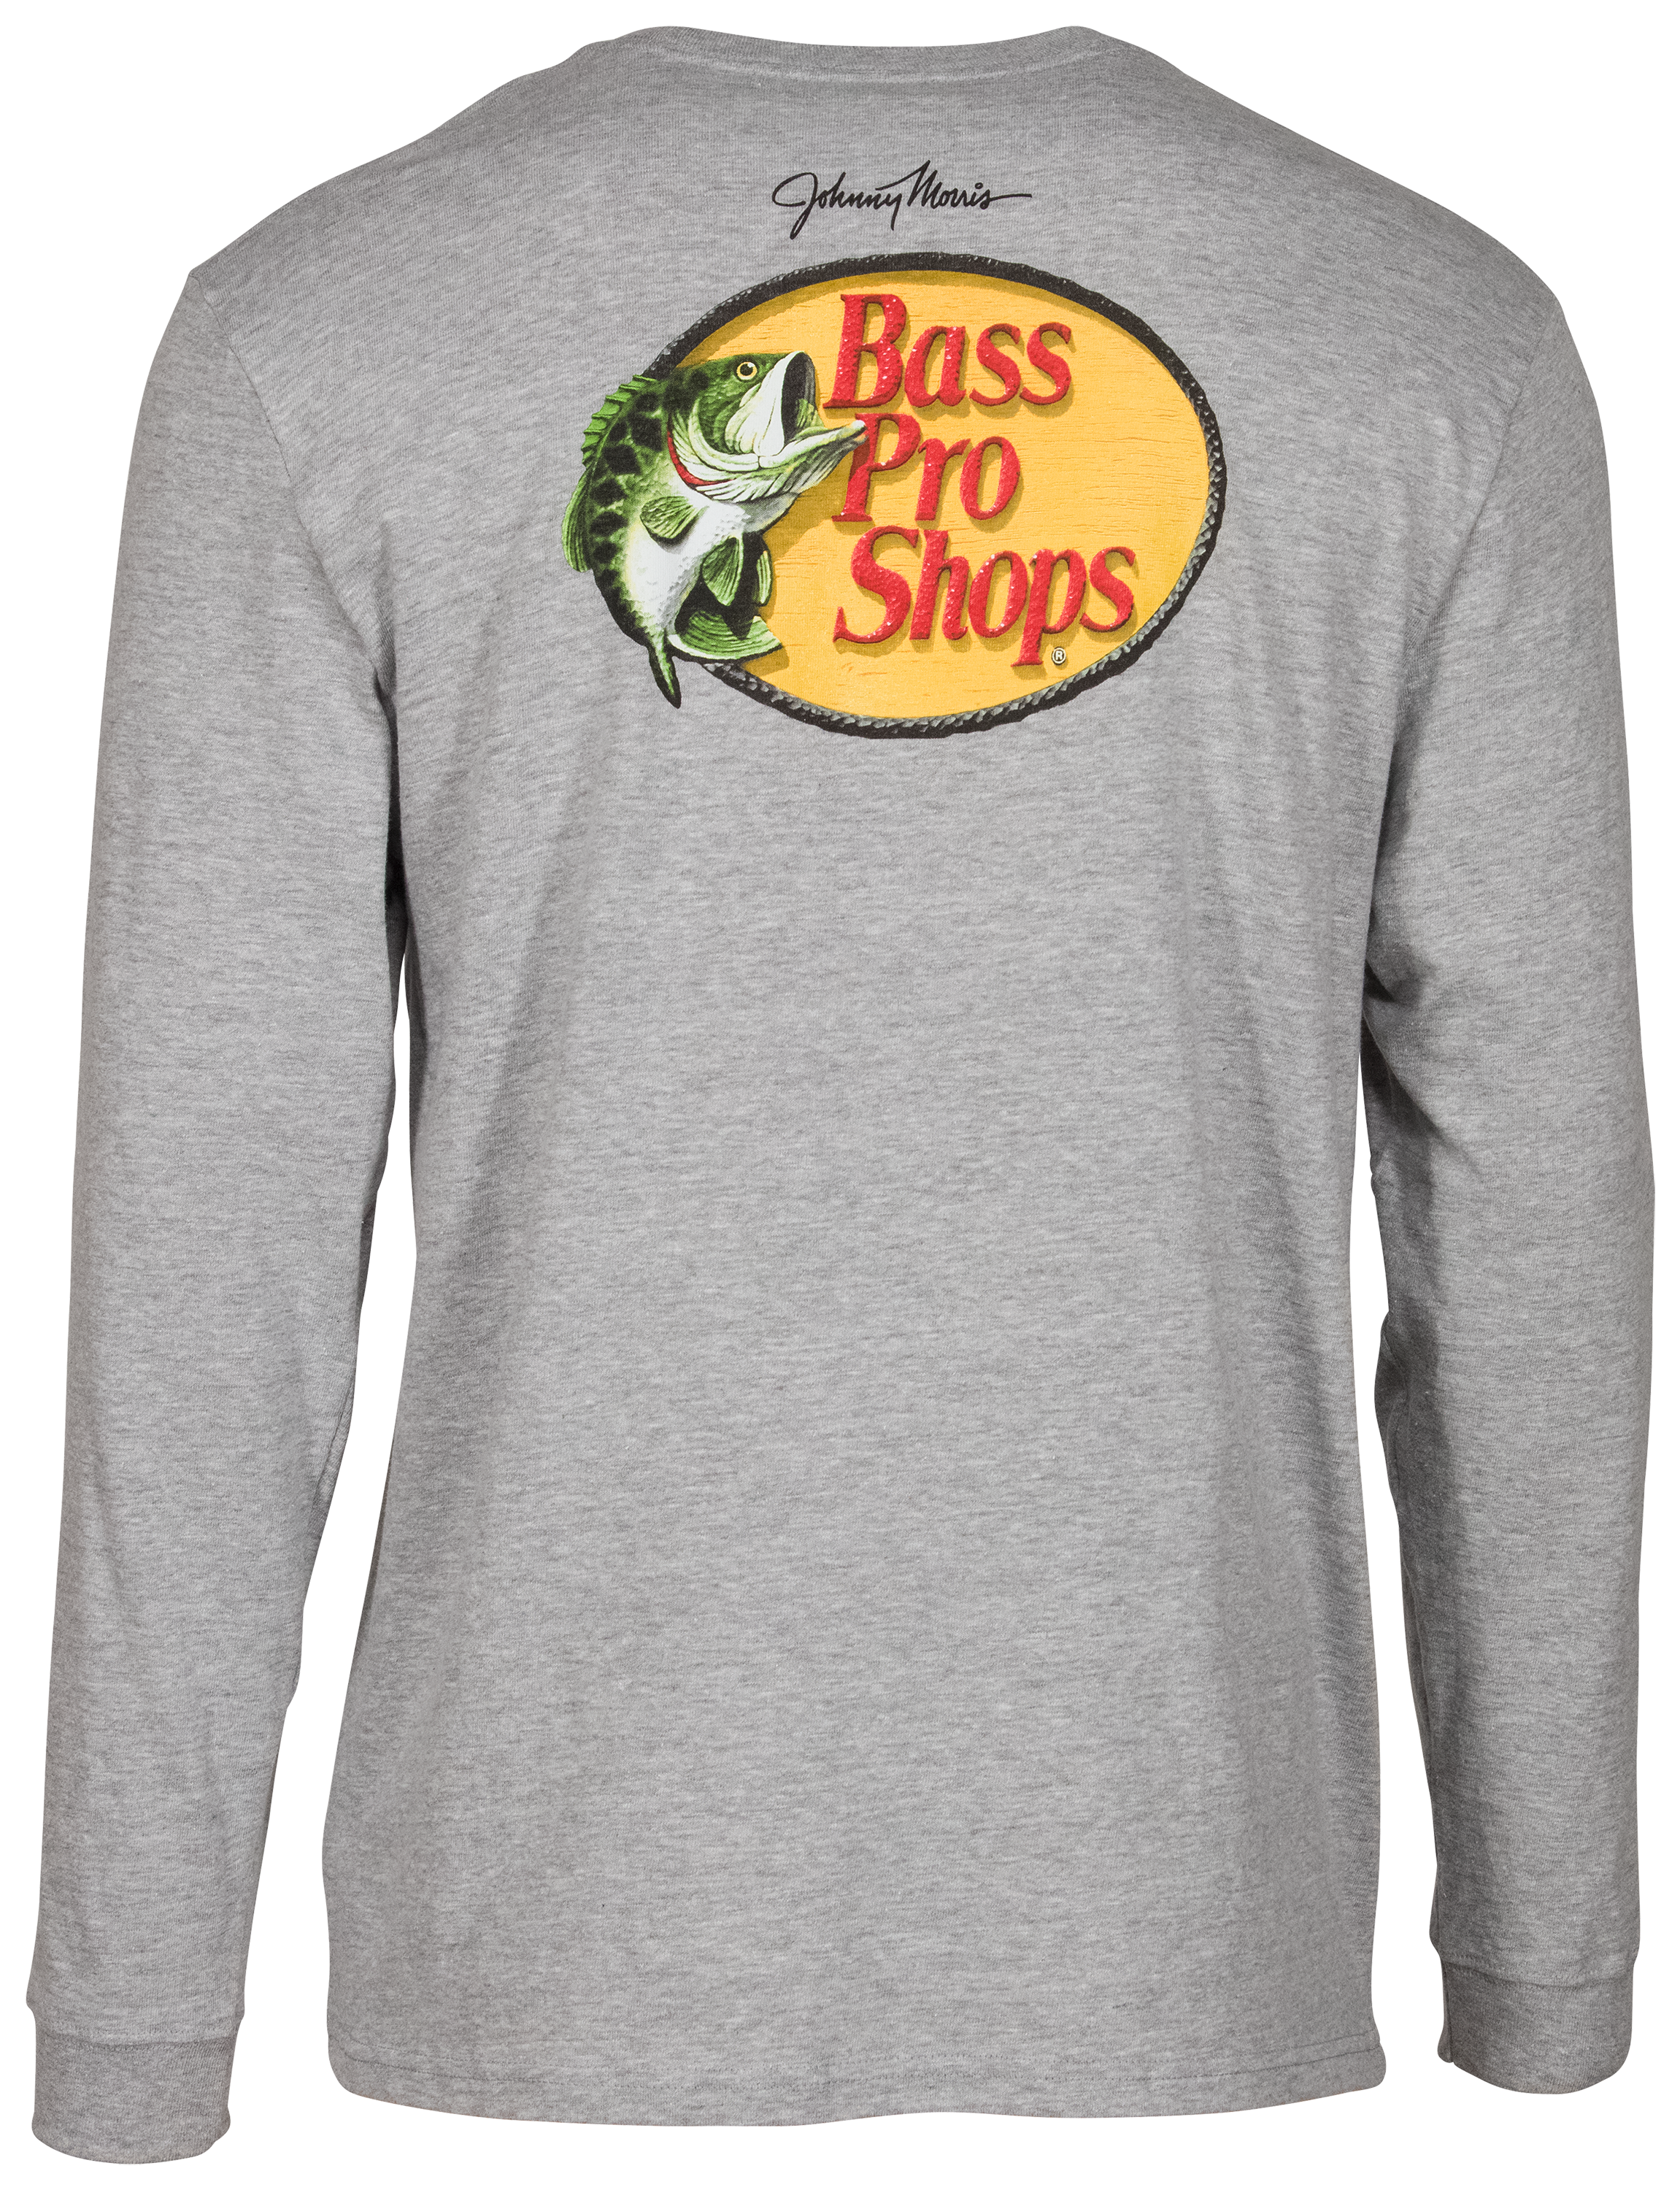 Bass Pro Shops Woodcut Long-Sleeve T-Shirt for Men - Denim Heather - 3XL